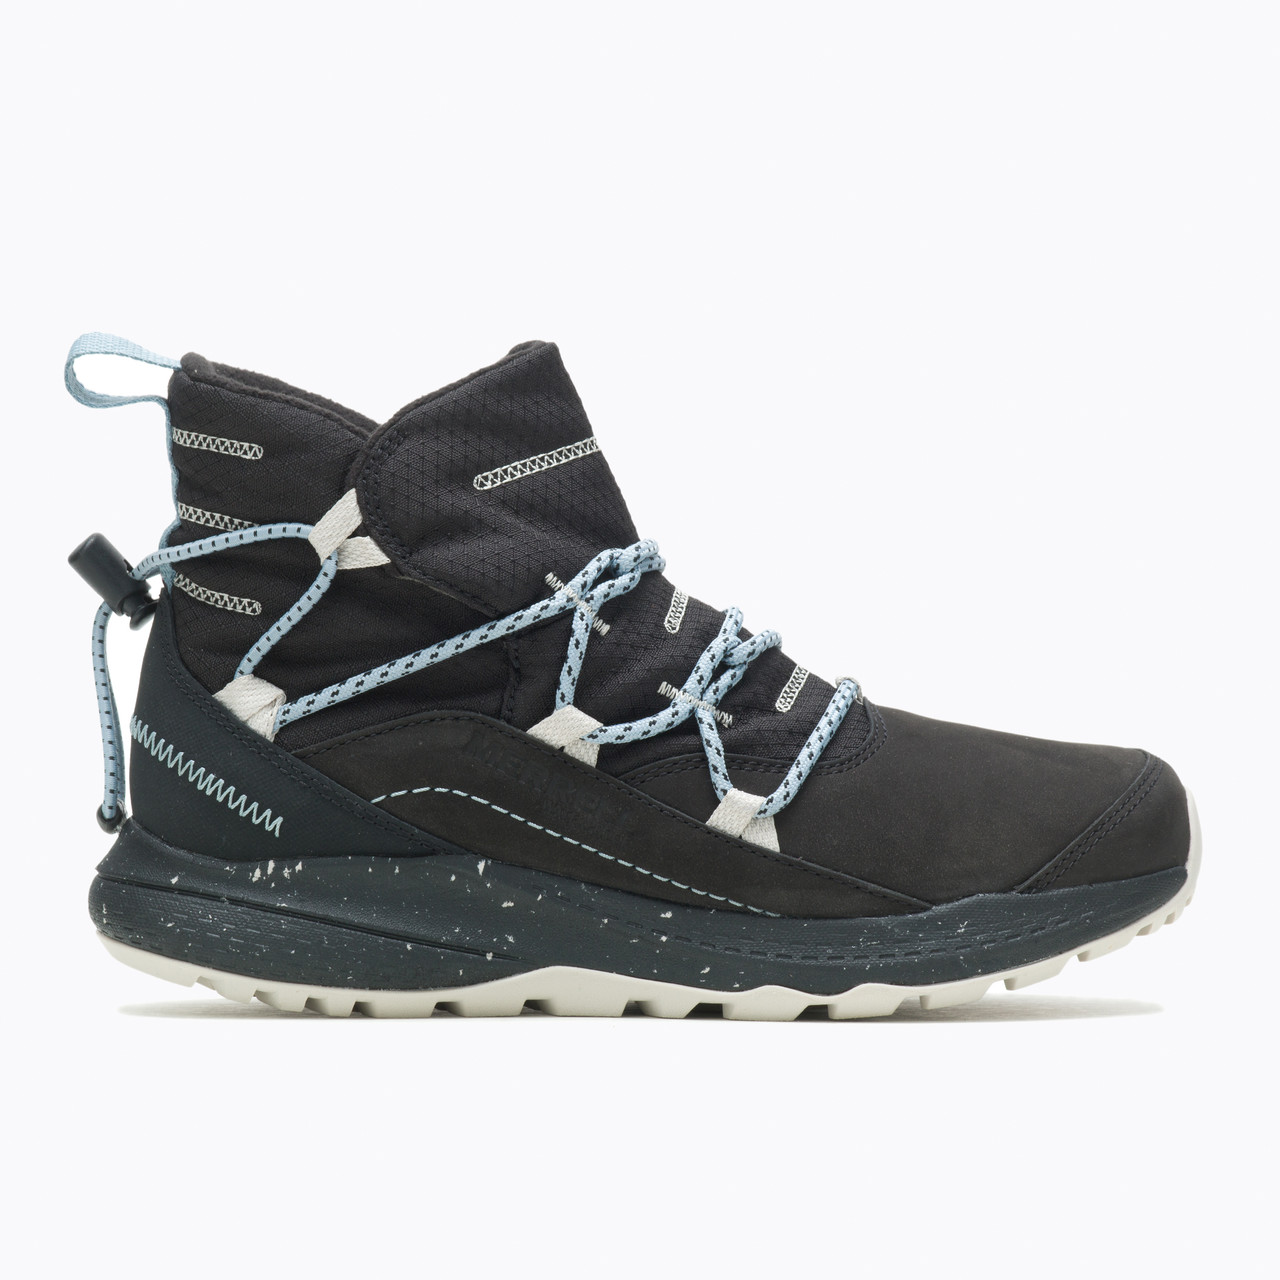 Merrell Siren 4 Thermo Demi Waterproof Hiking Boots Black